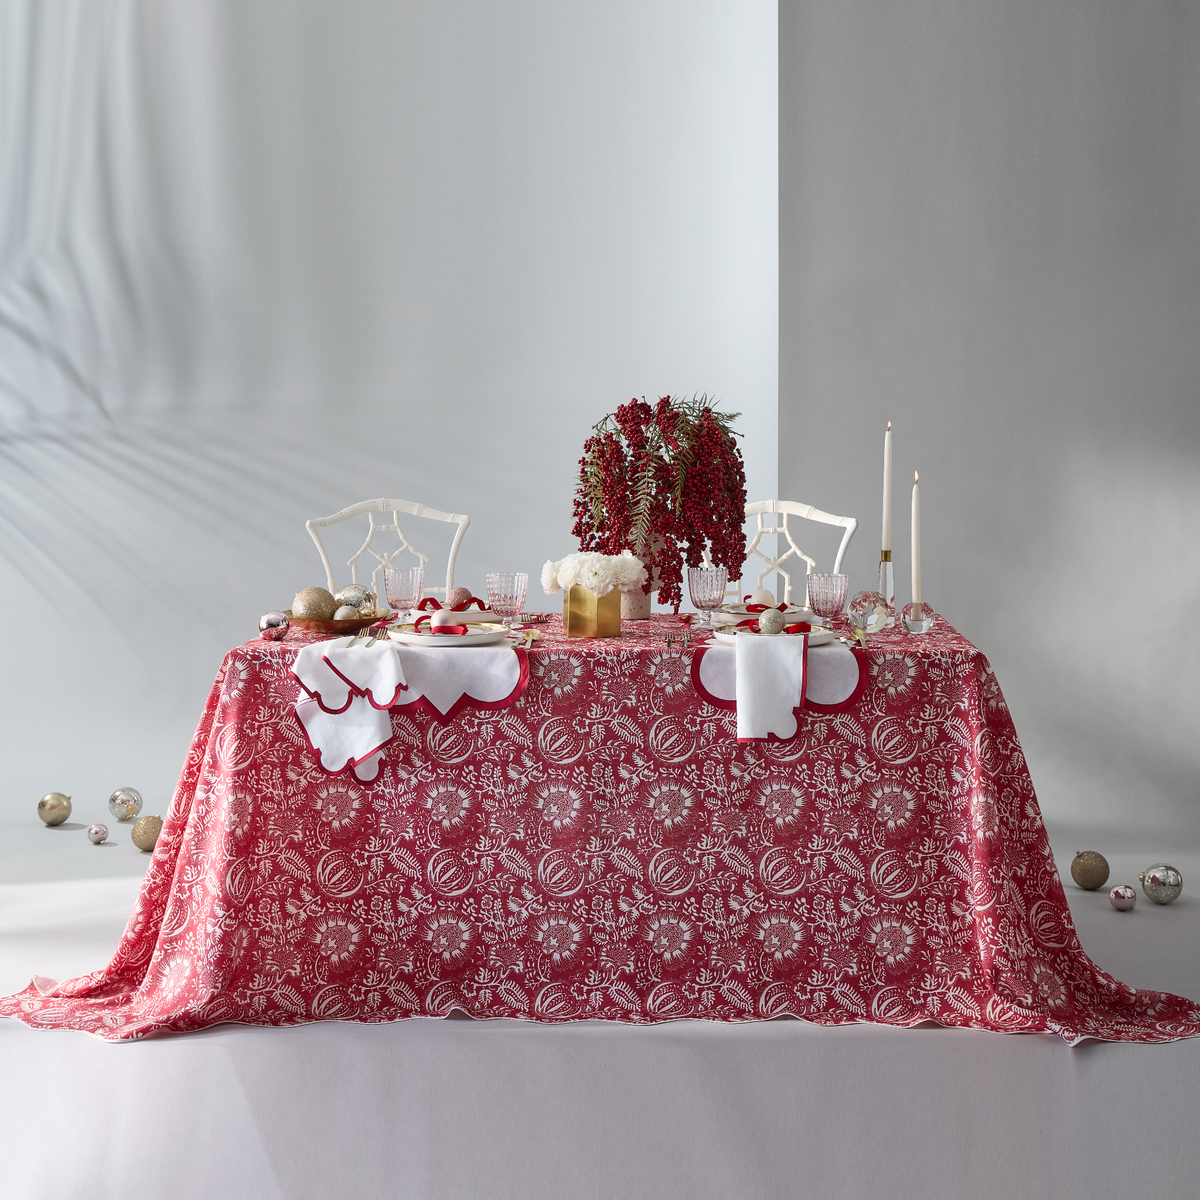 Full View Matouk Granada Table Linens in Scarlet Color